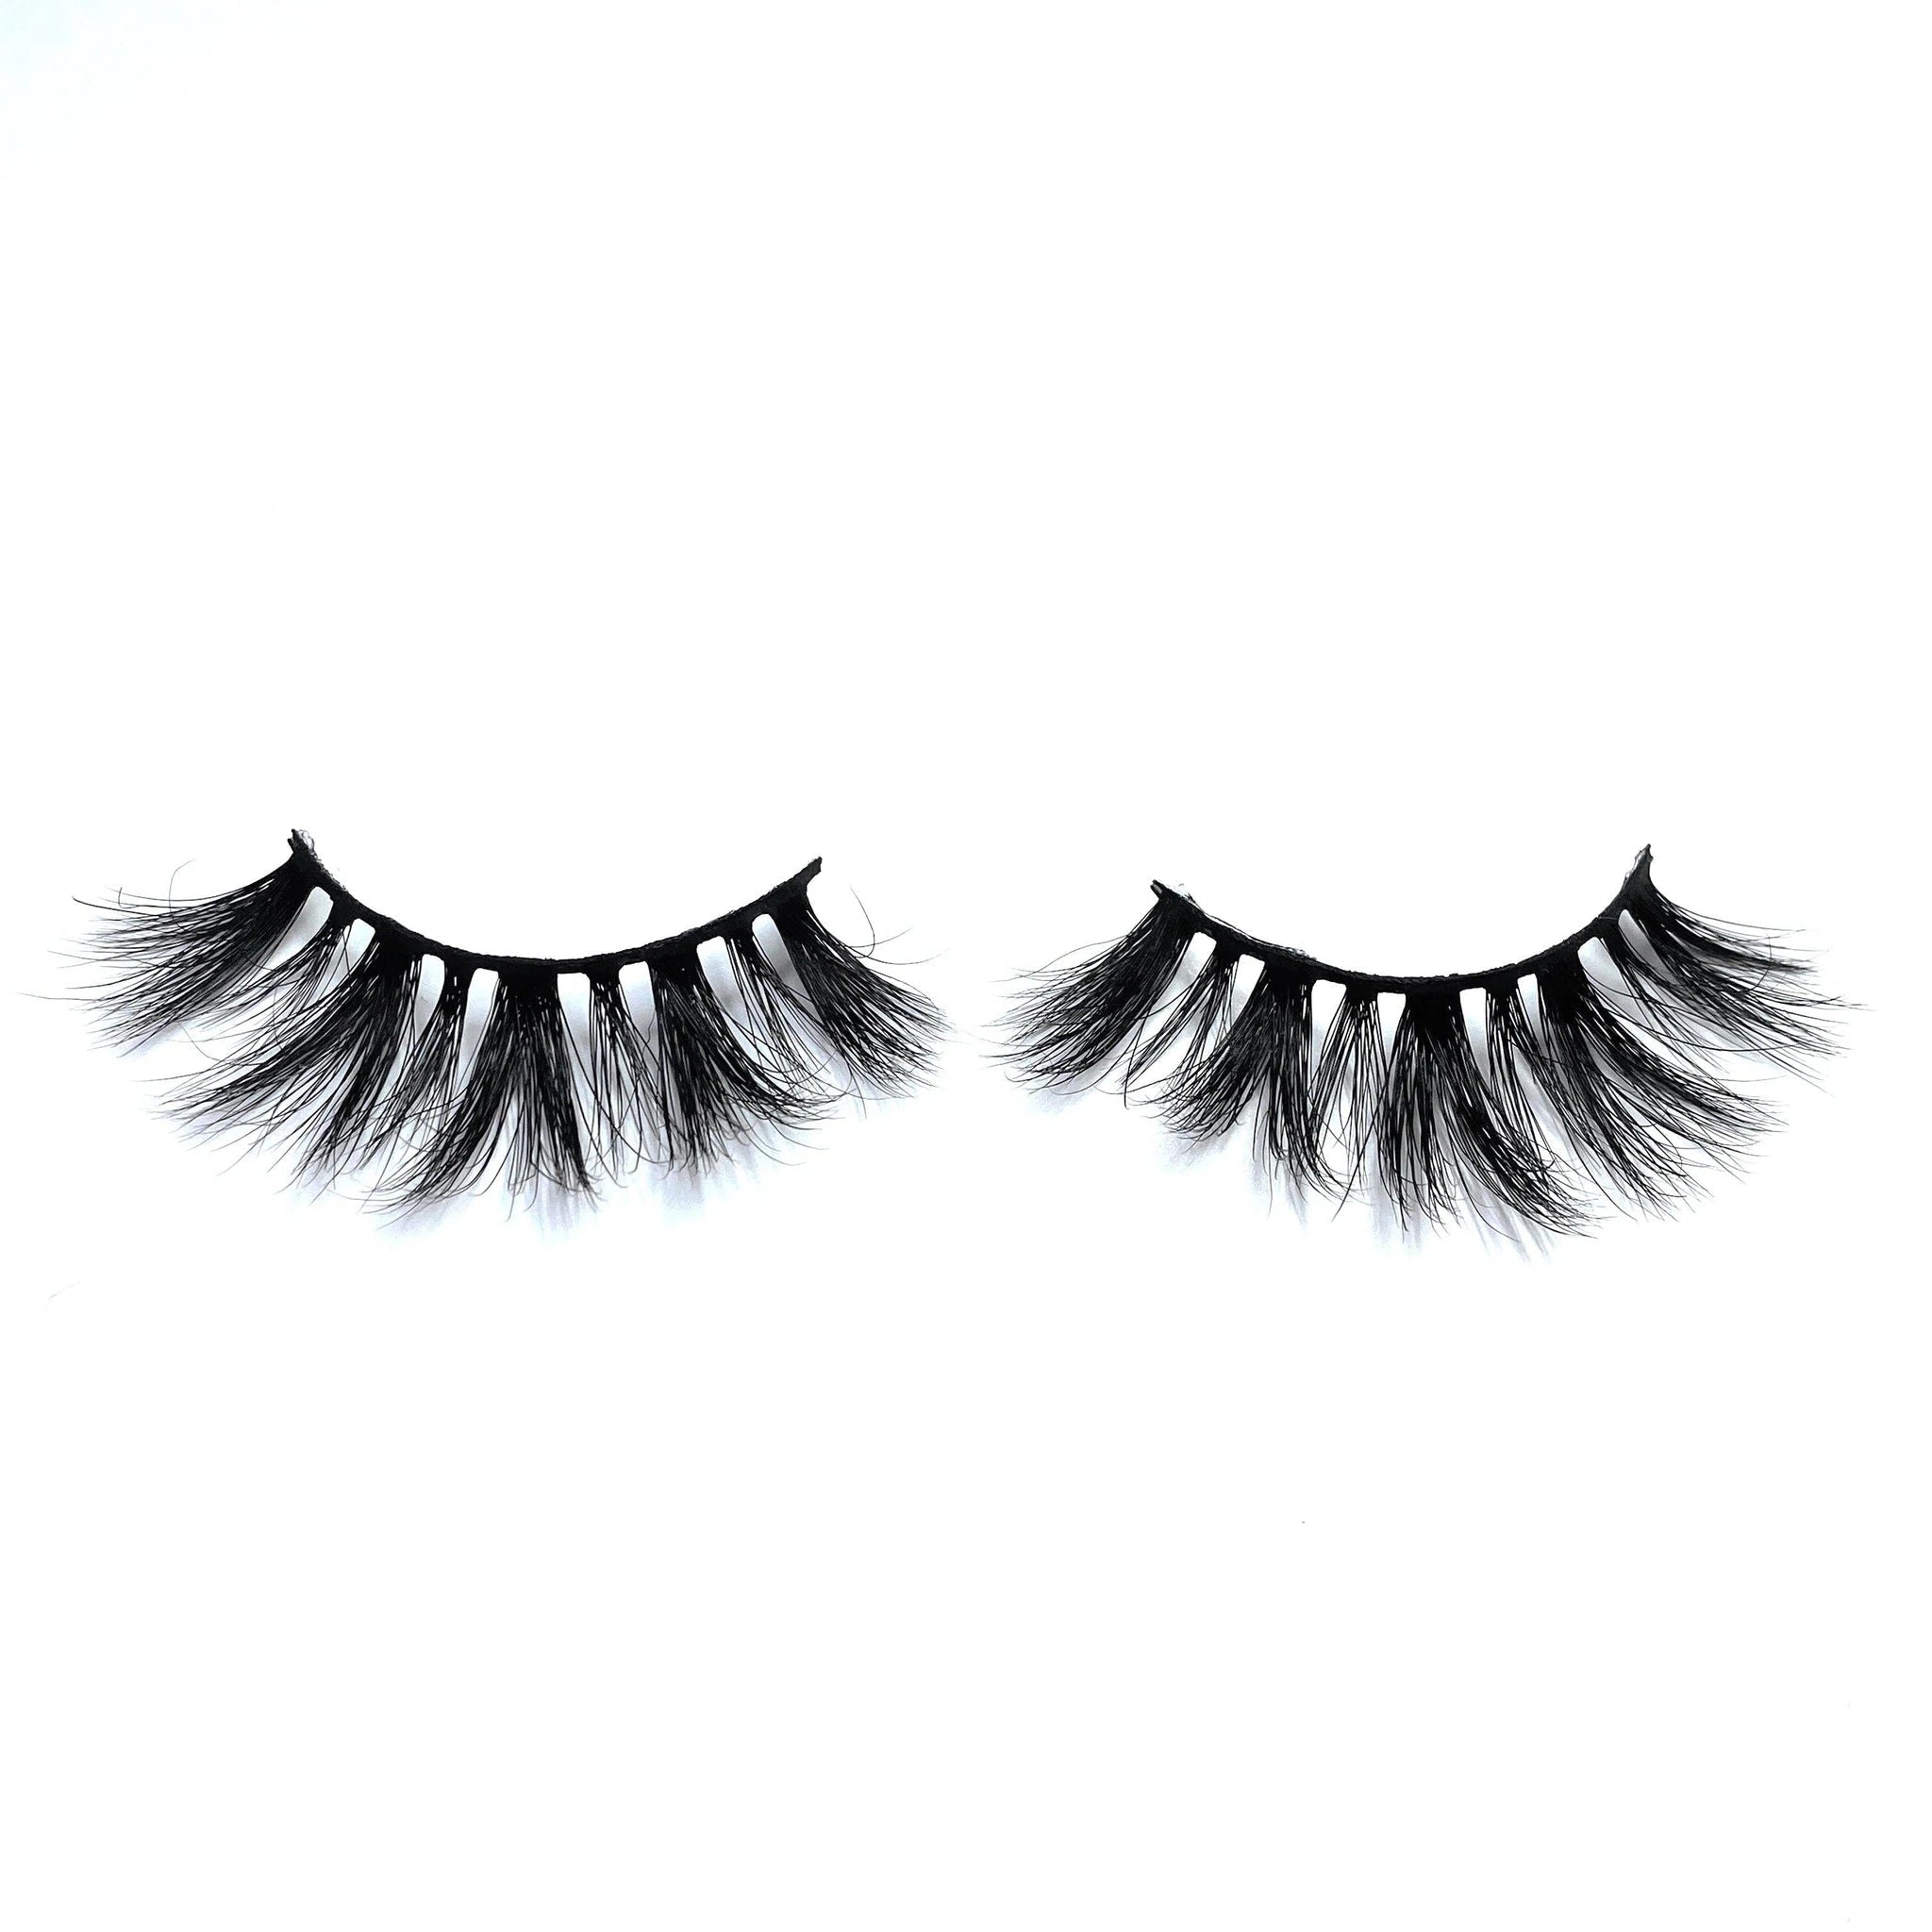 1 Pair Handmade Faux Mink Eyelashes- Black (Muse) - IMAKEUPNOW. INC